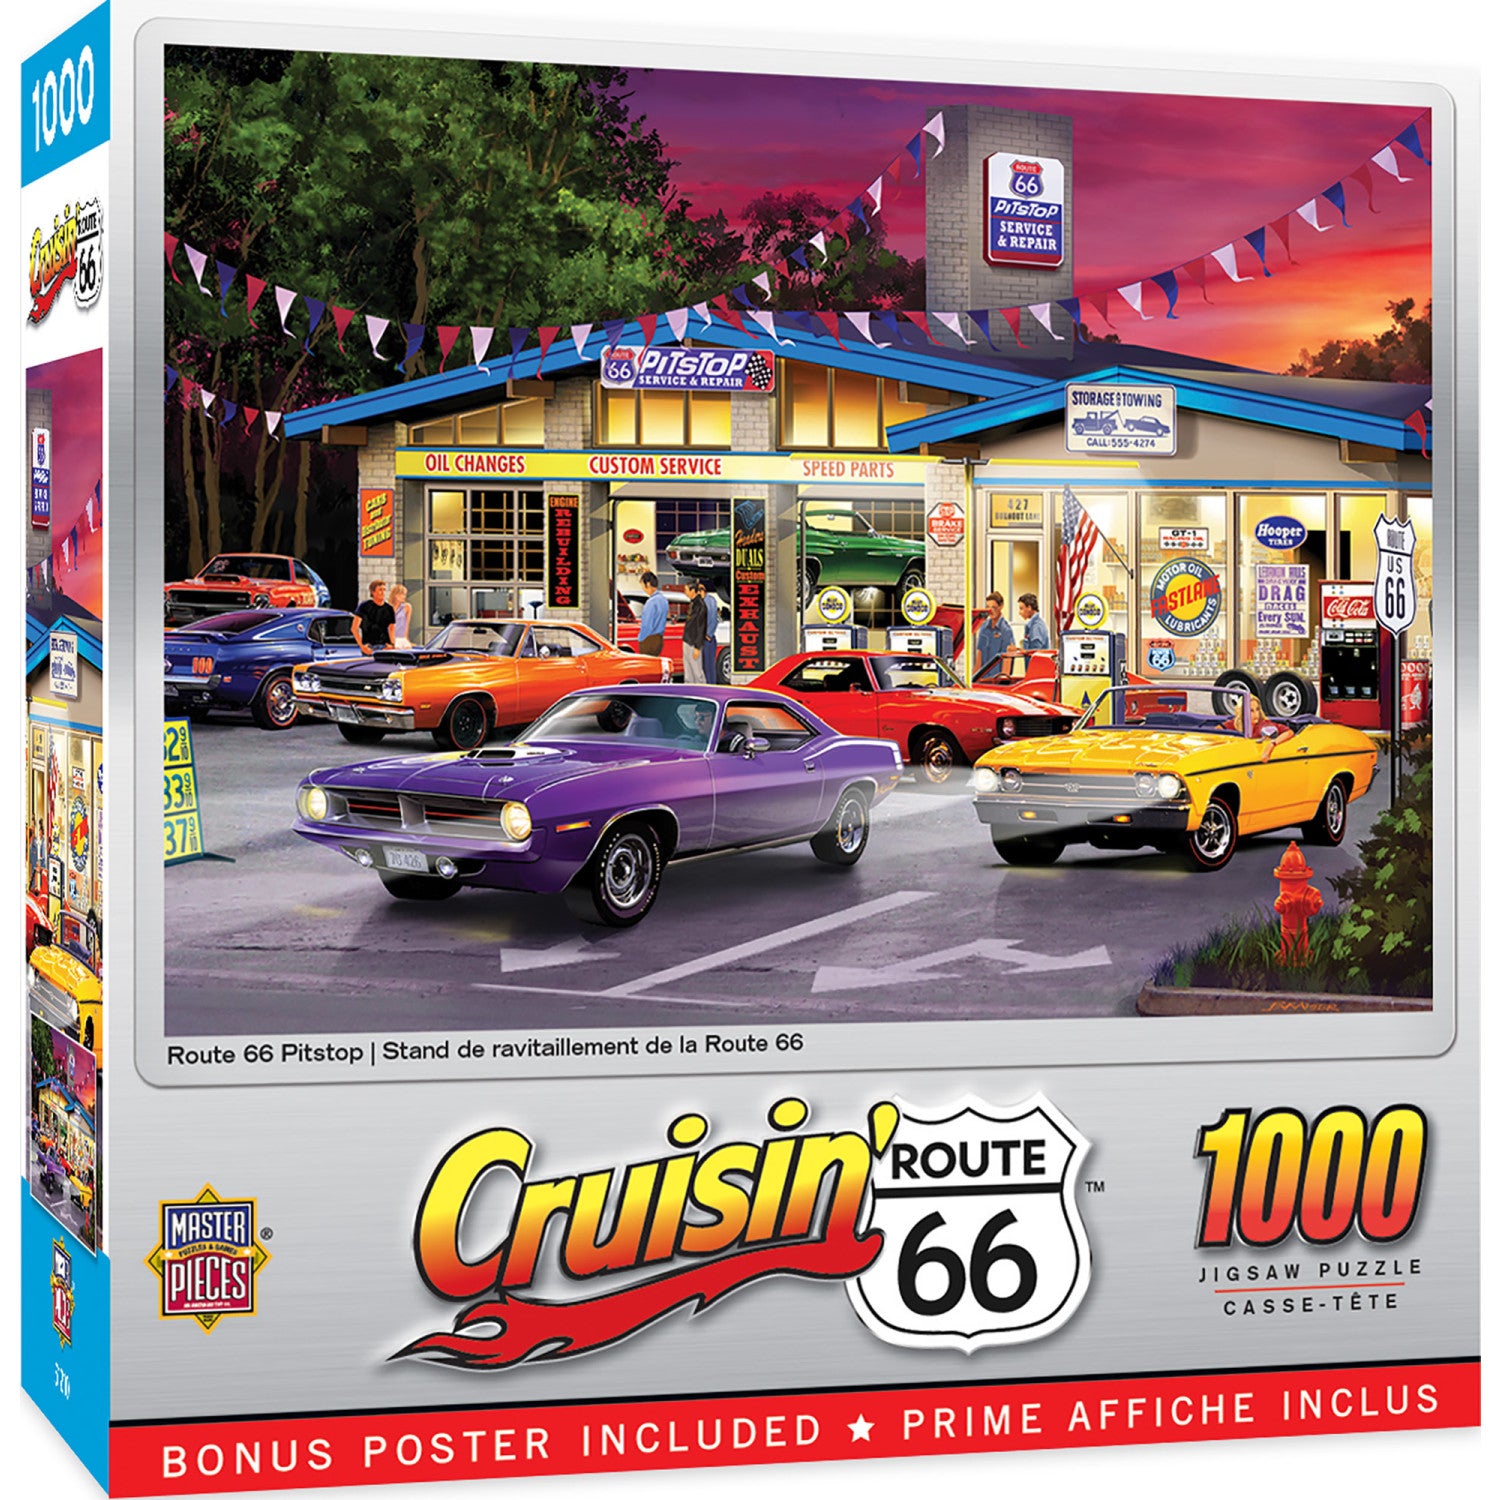 Cruisin' Route 66 - Pitstop 1000 Piece Puzzle